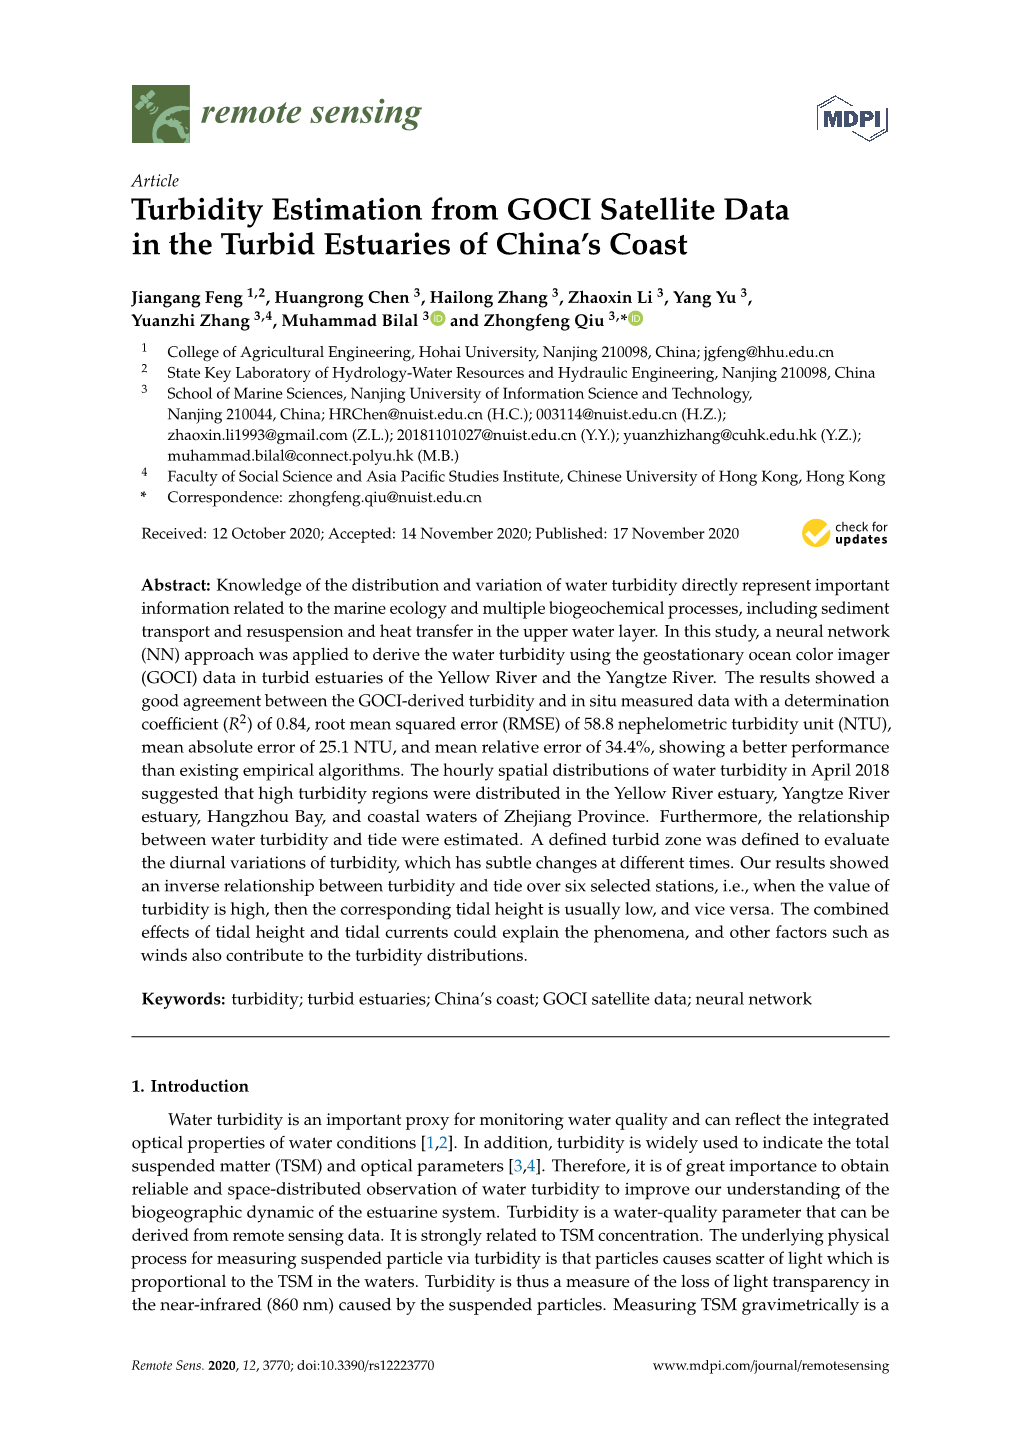 Turbidity Estimation from GOCI Satellite Data in the Turbid Estuaries of China’S Coast